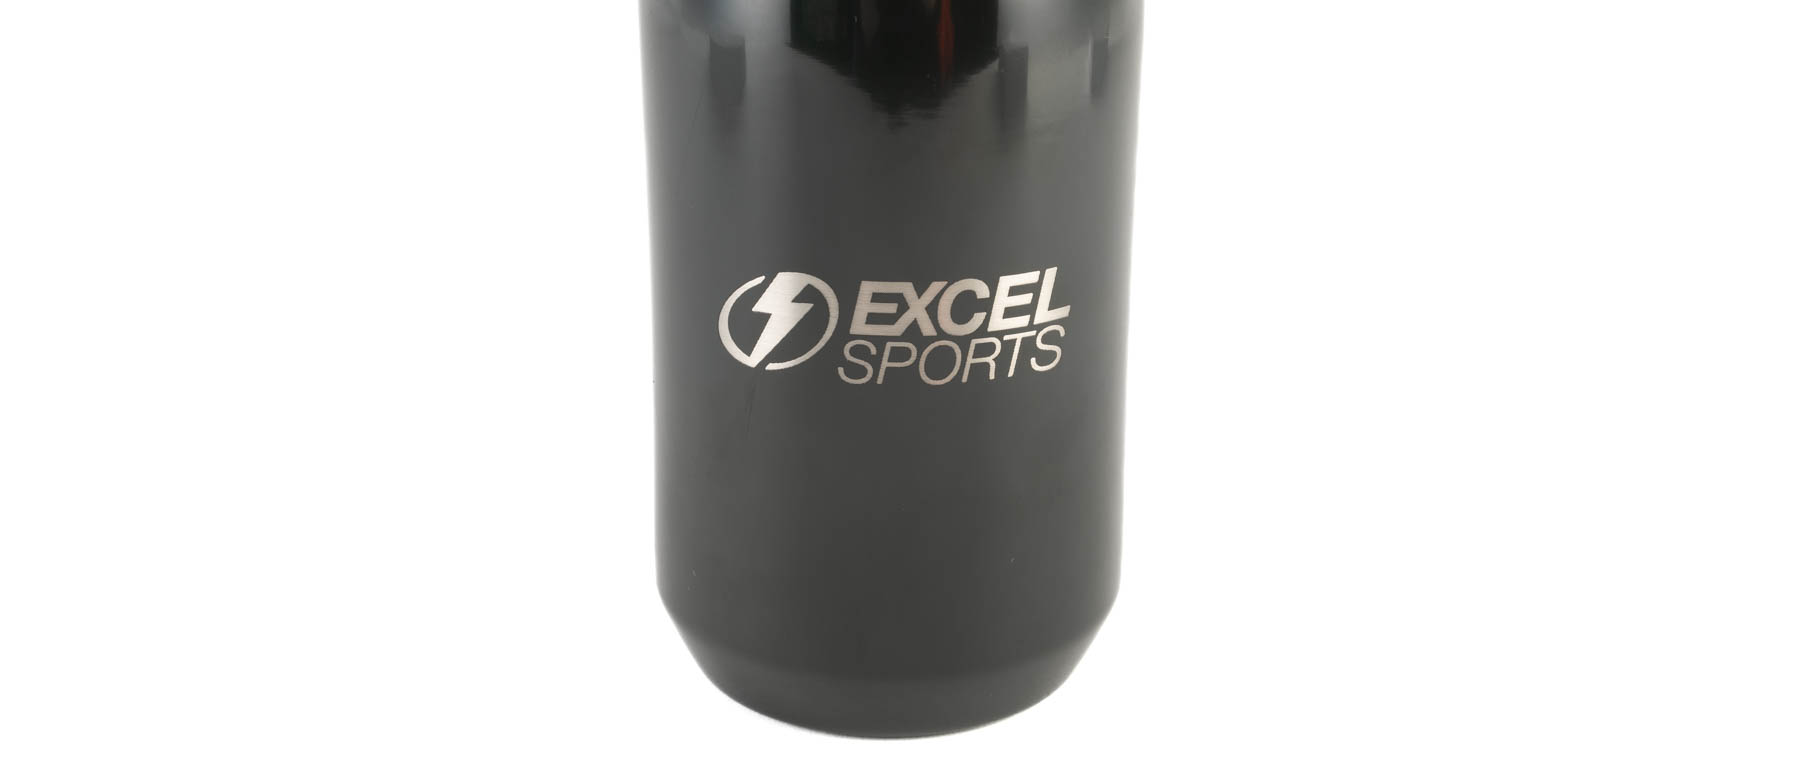 CamelBak Excel Sports Podium Stainless Steel Bottle 22oz